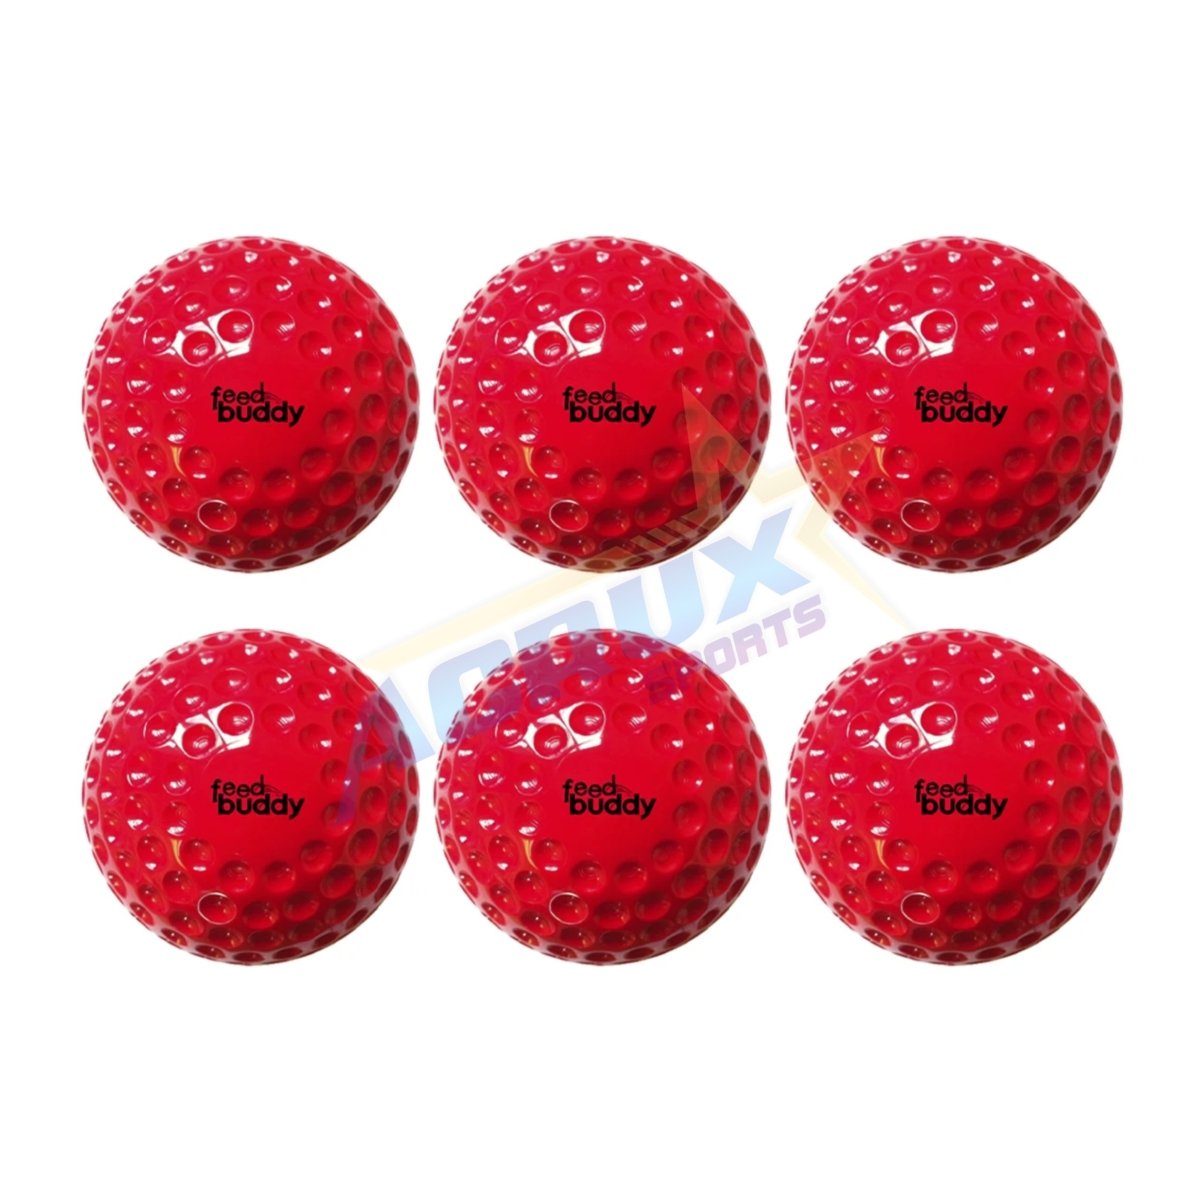 Speed Buddy Soft balls (Pack of 6).